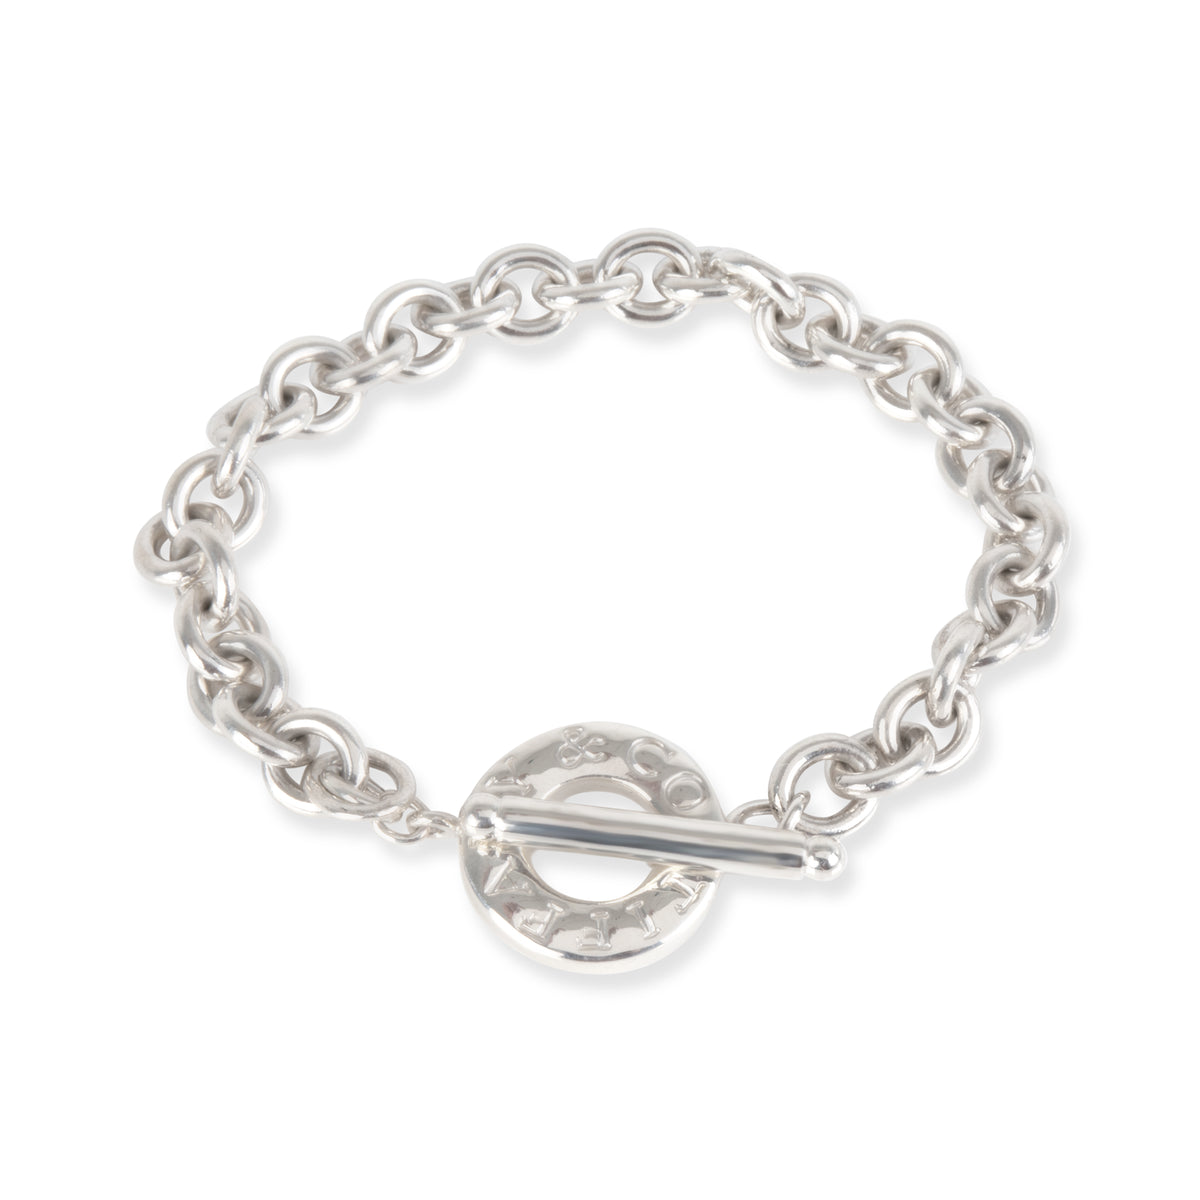 Tiffany & Co. Toggle Bracelet in  Sterling Silver